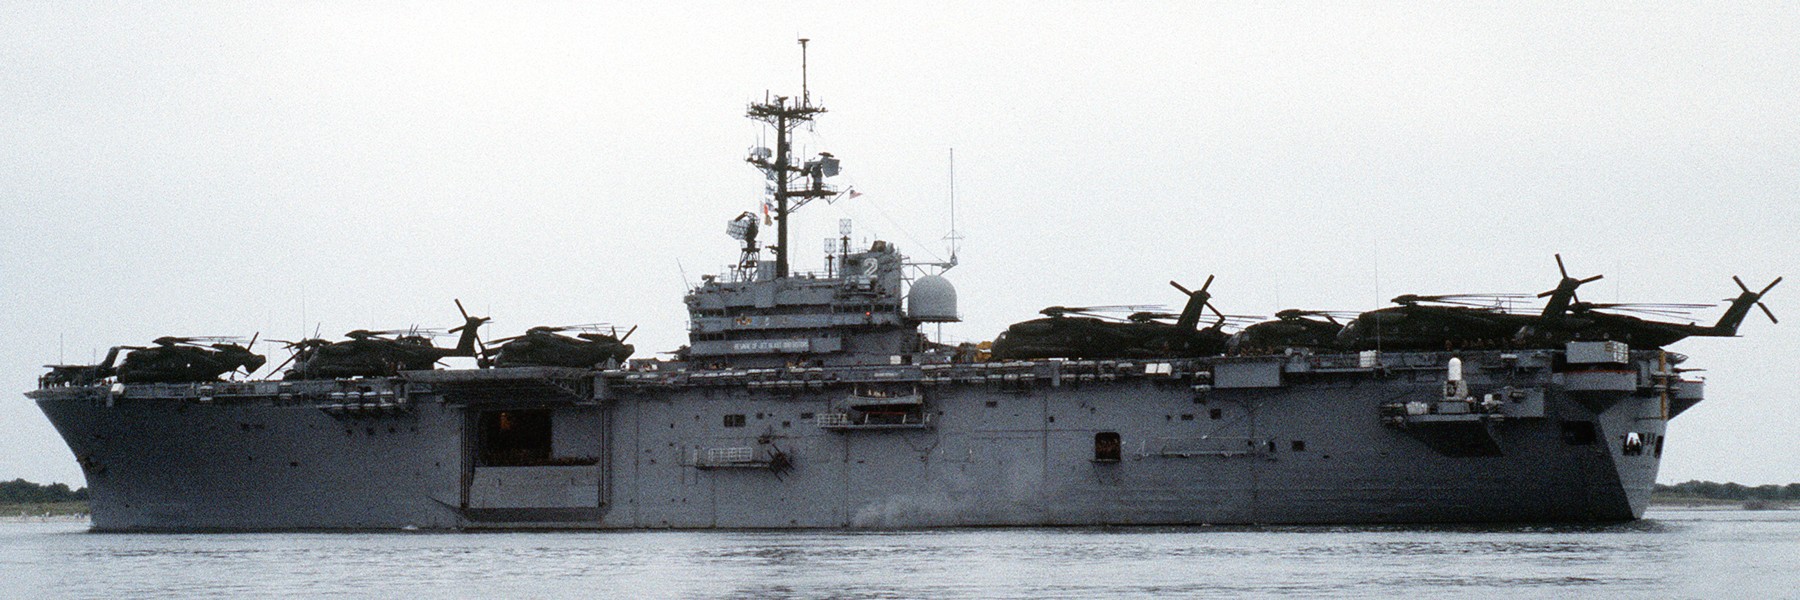 lph-2 uss iwo jima class amphibious assault ship landing platform helicopter us navy departing morehead city 58